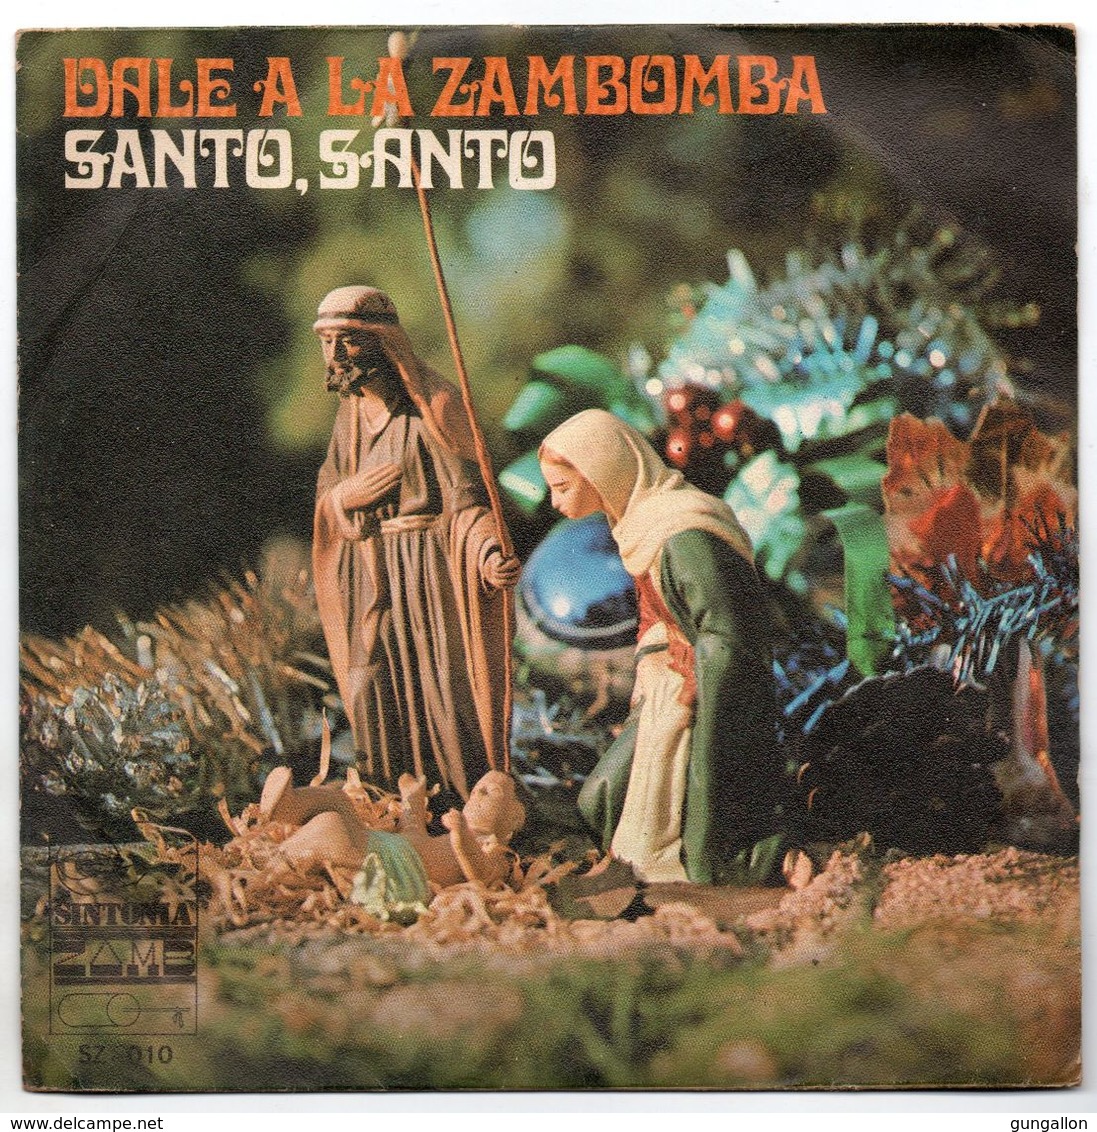 Gruppo Flamenco De Torres Bermajas  (1970)  "Santo  Santo  Santo" - Instrumental